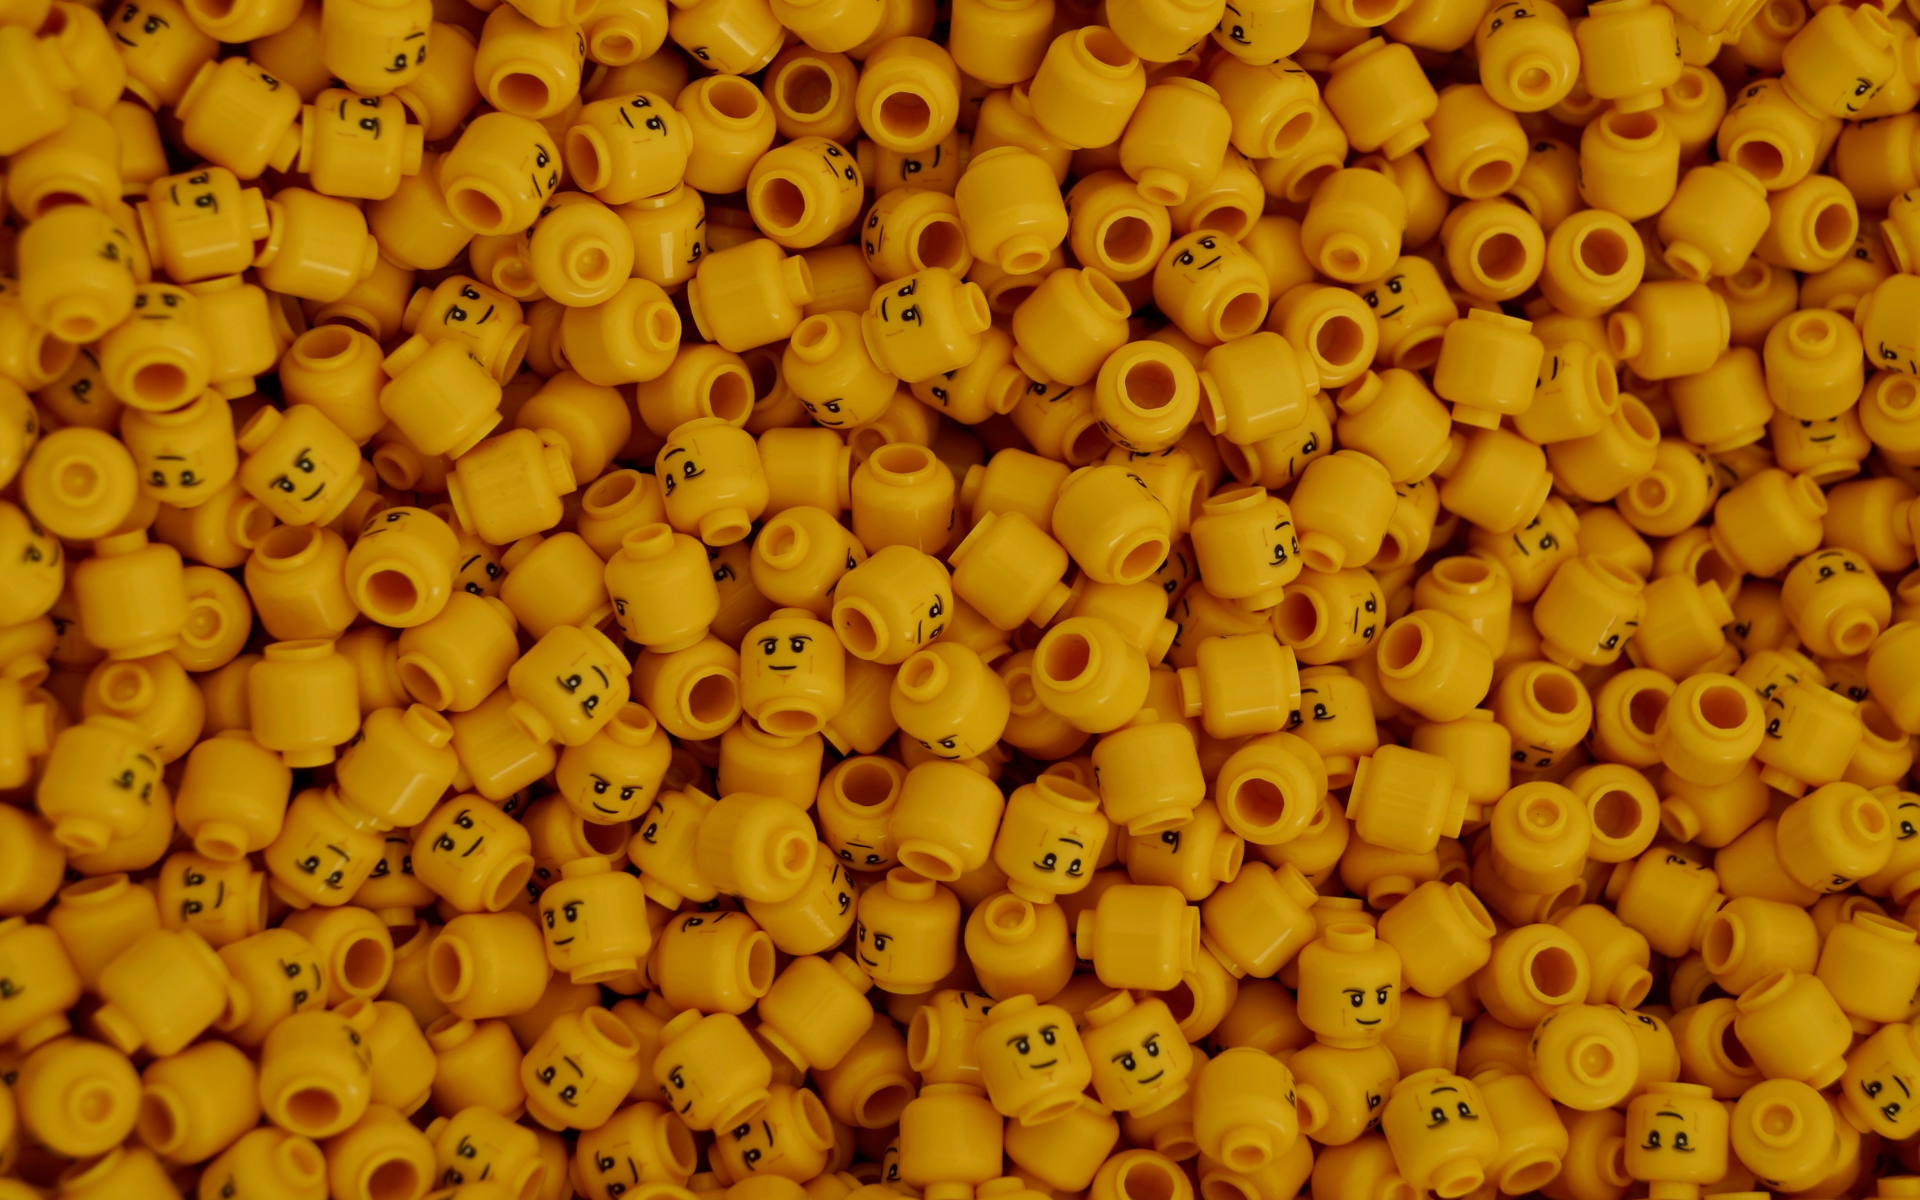 Yellow, Lego, toy, 1920x1200 wallpaper